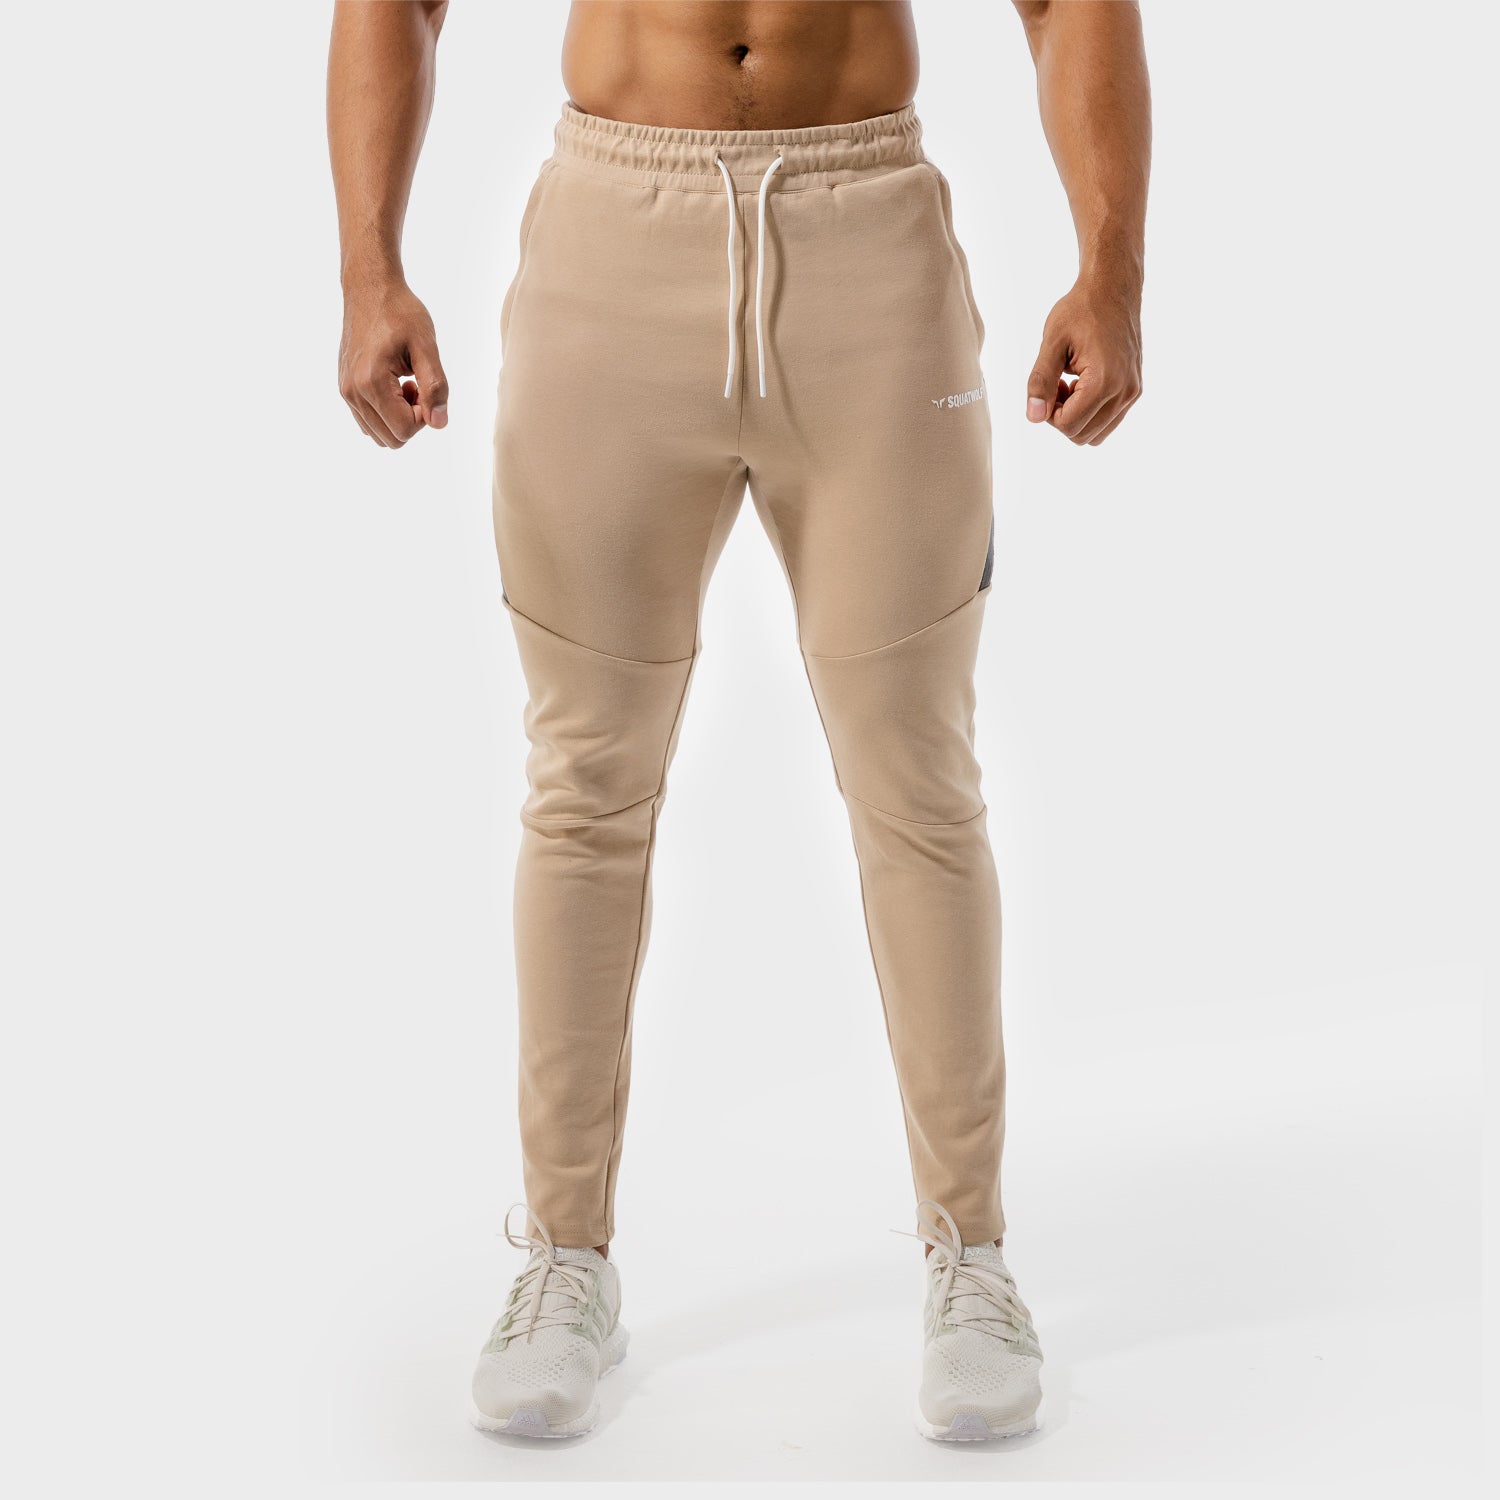 squatwolf-gym-wear-warrior-jogger-pants-brown-workout-pants-for-men